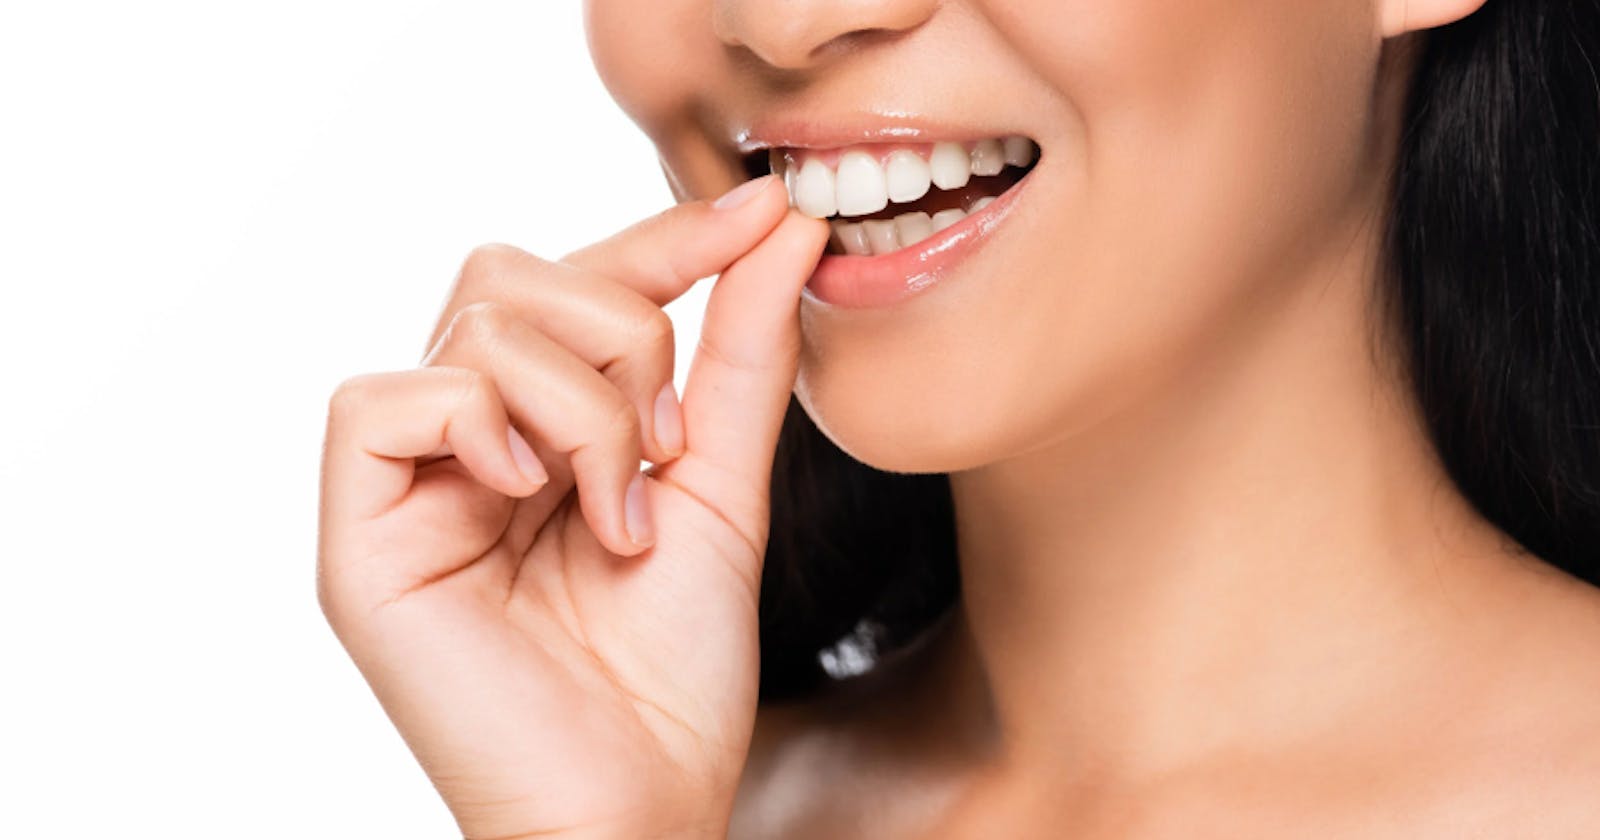 Zoracel Dental Gummy Reviews: Should You Buy?